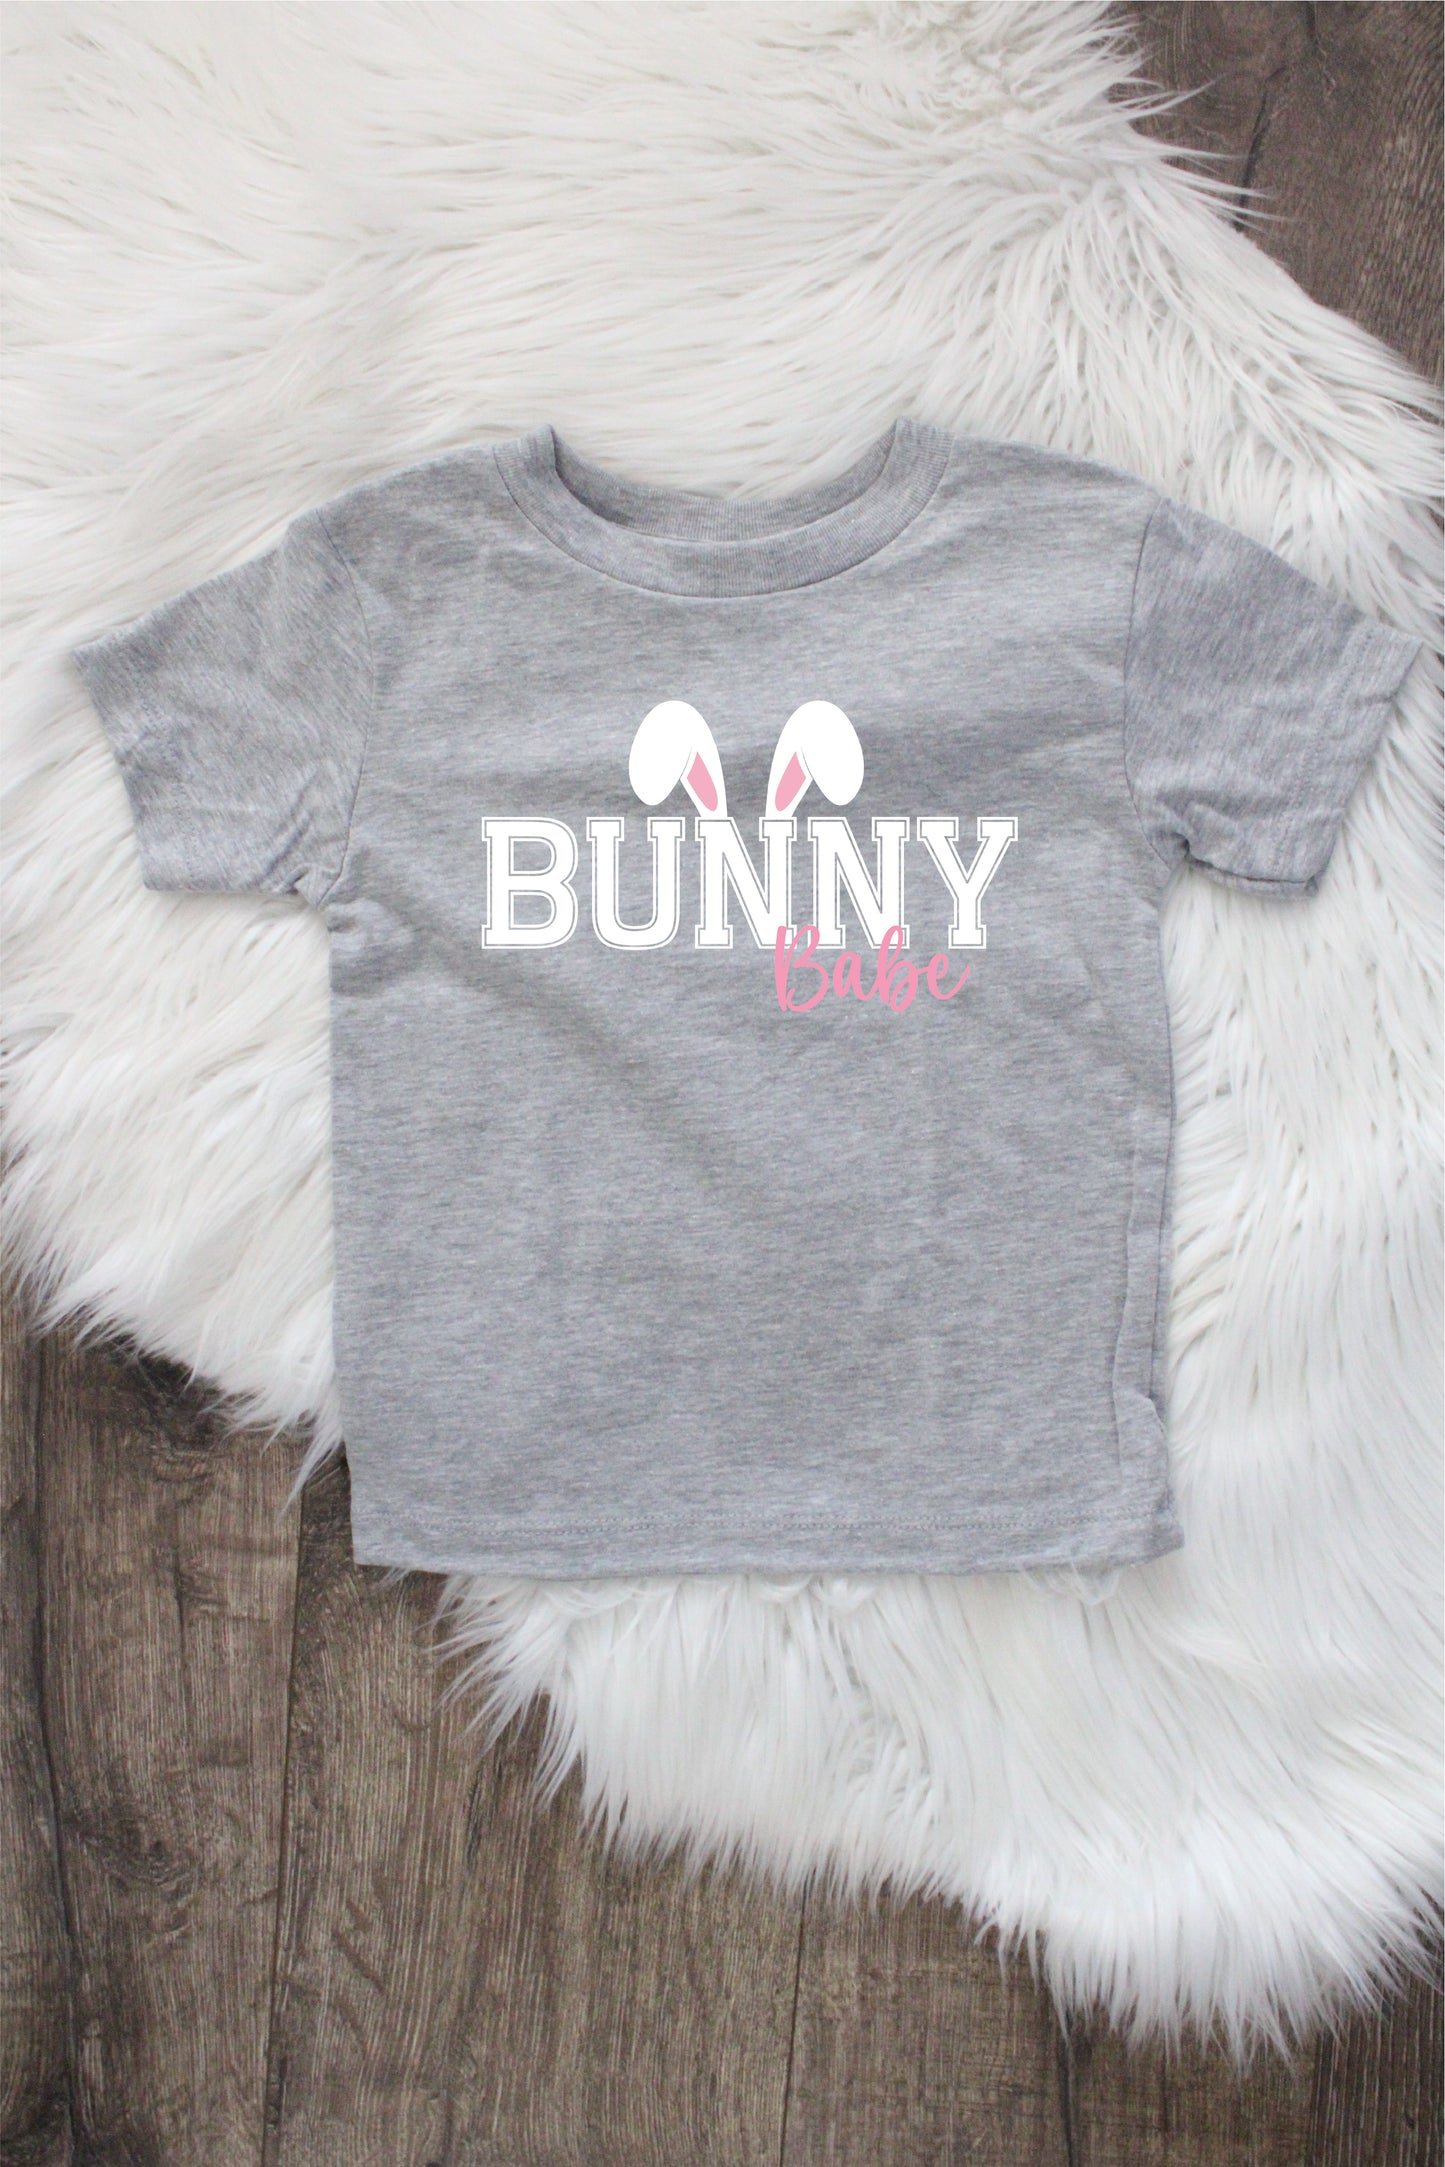 Bunny Babe Shirts